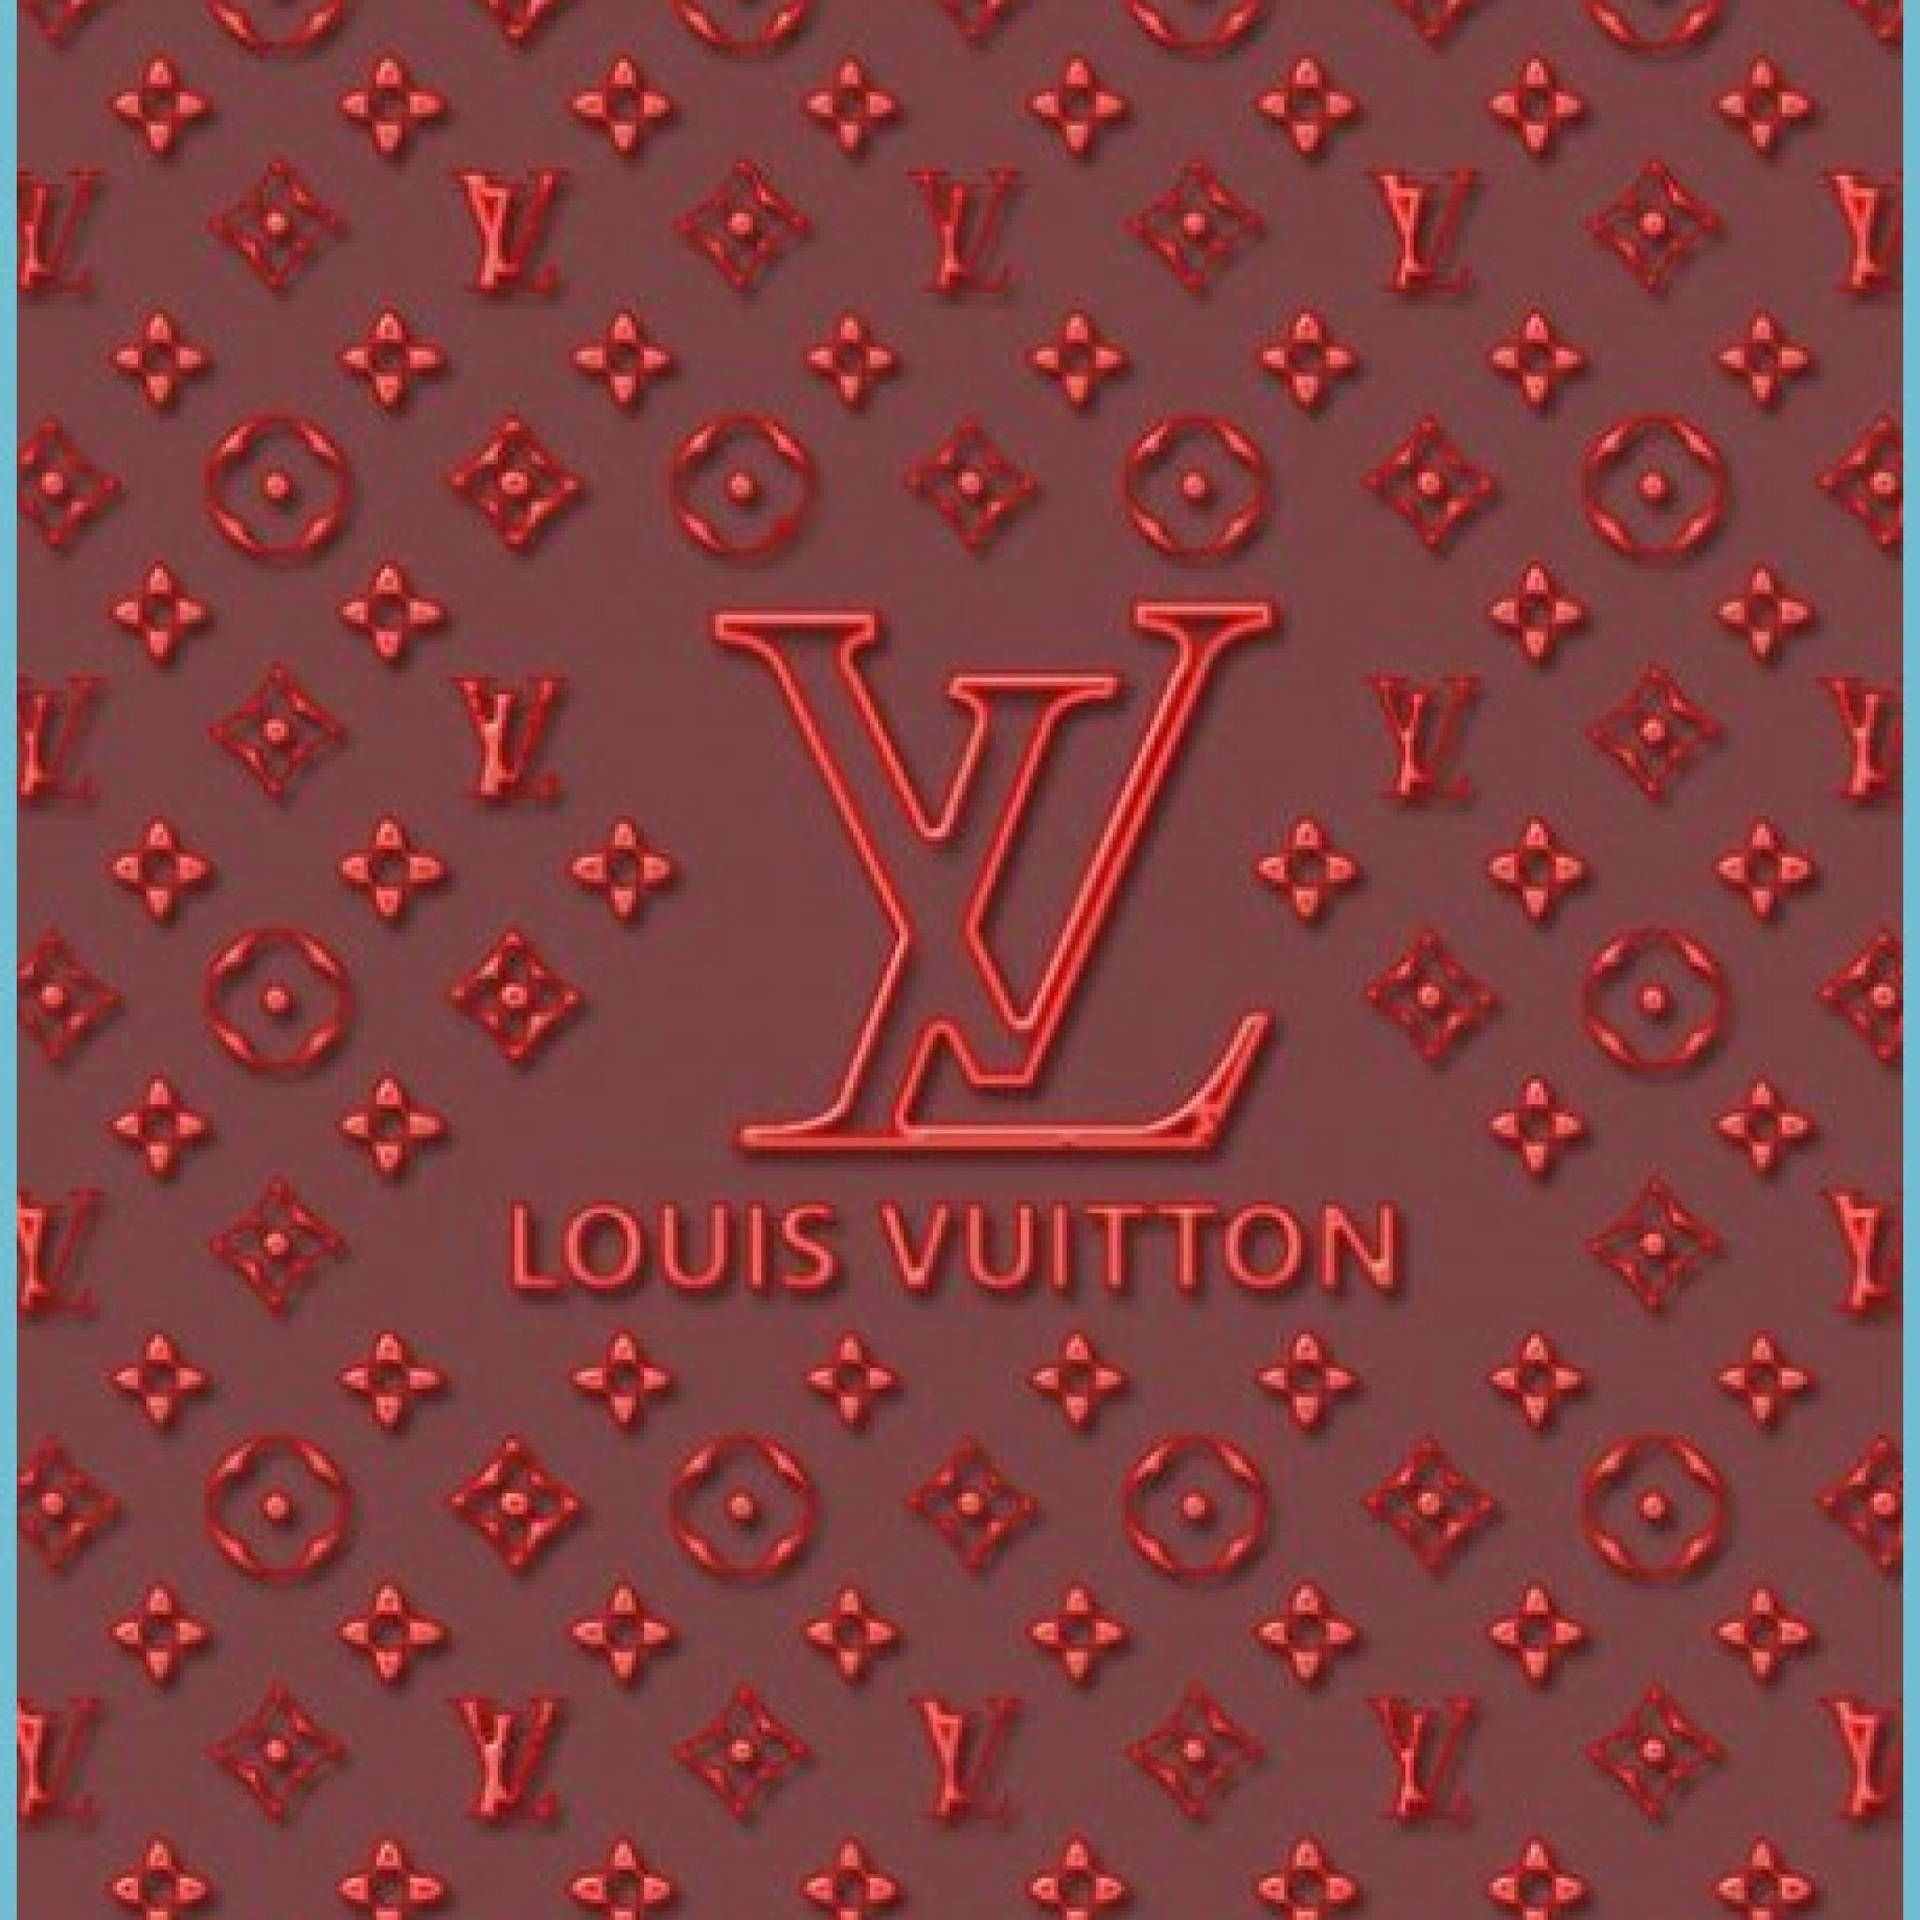 Louis Vuitton wallpaper I made for my phone! - Louis Vuitton